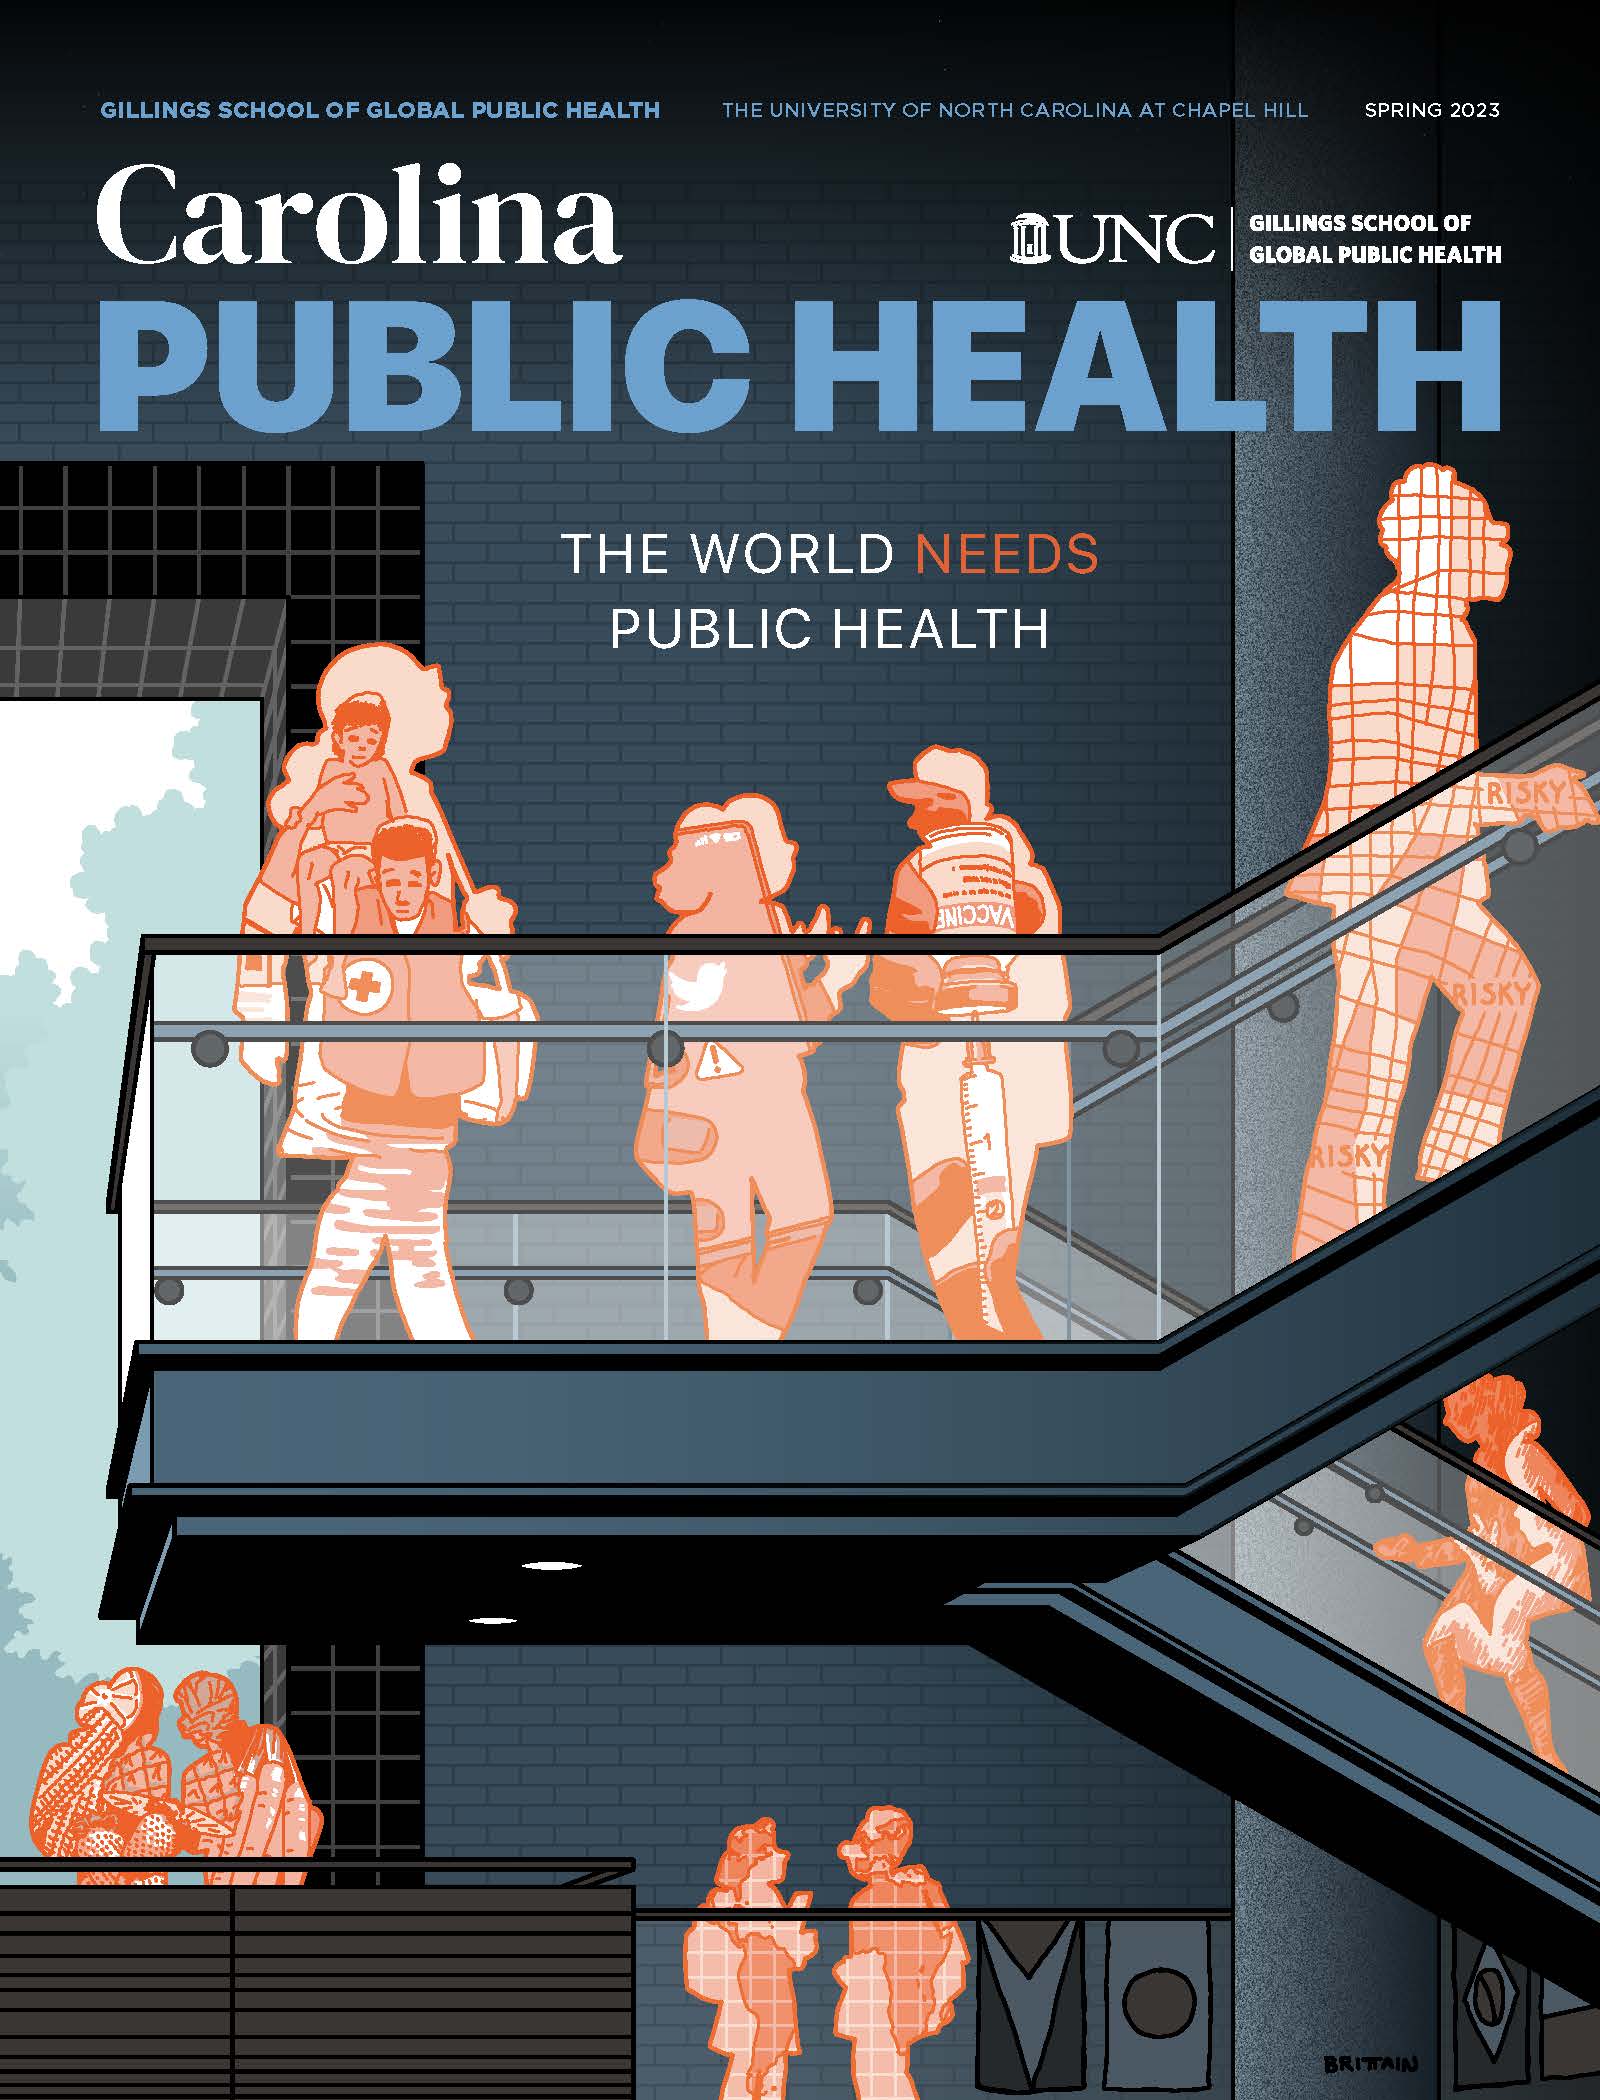 health data management magazine